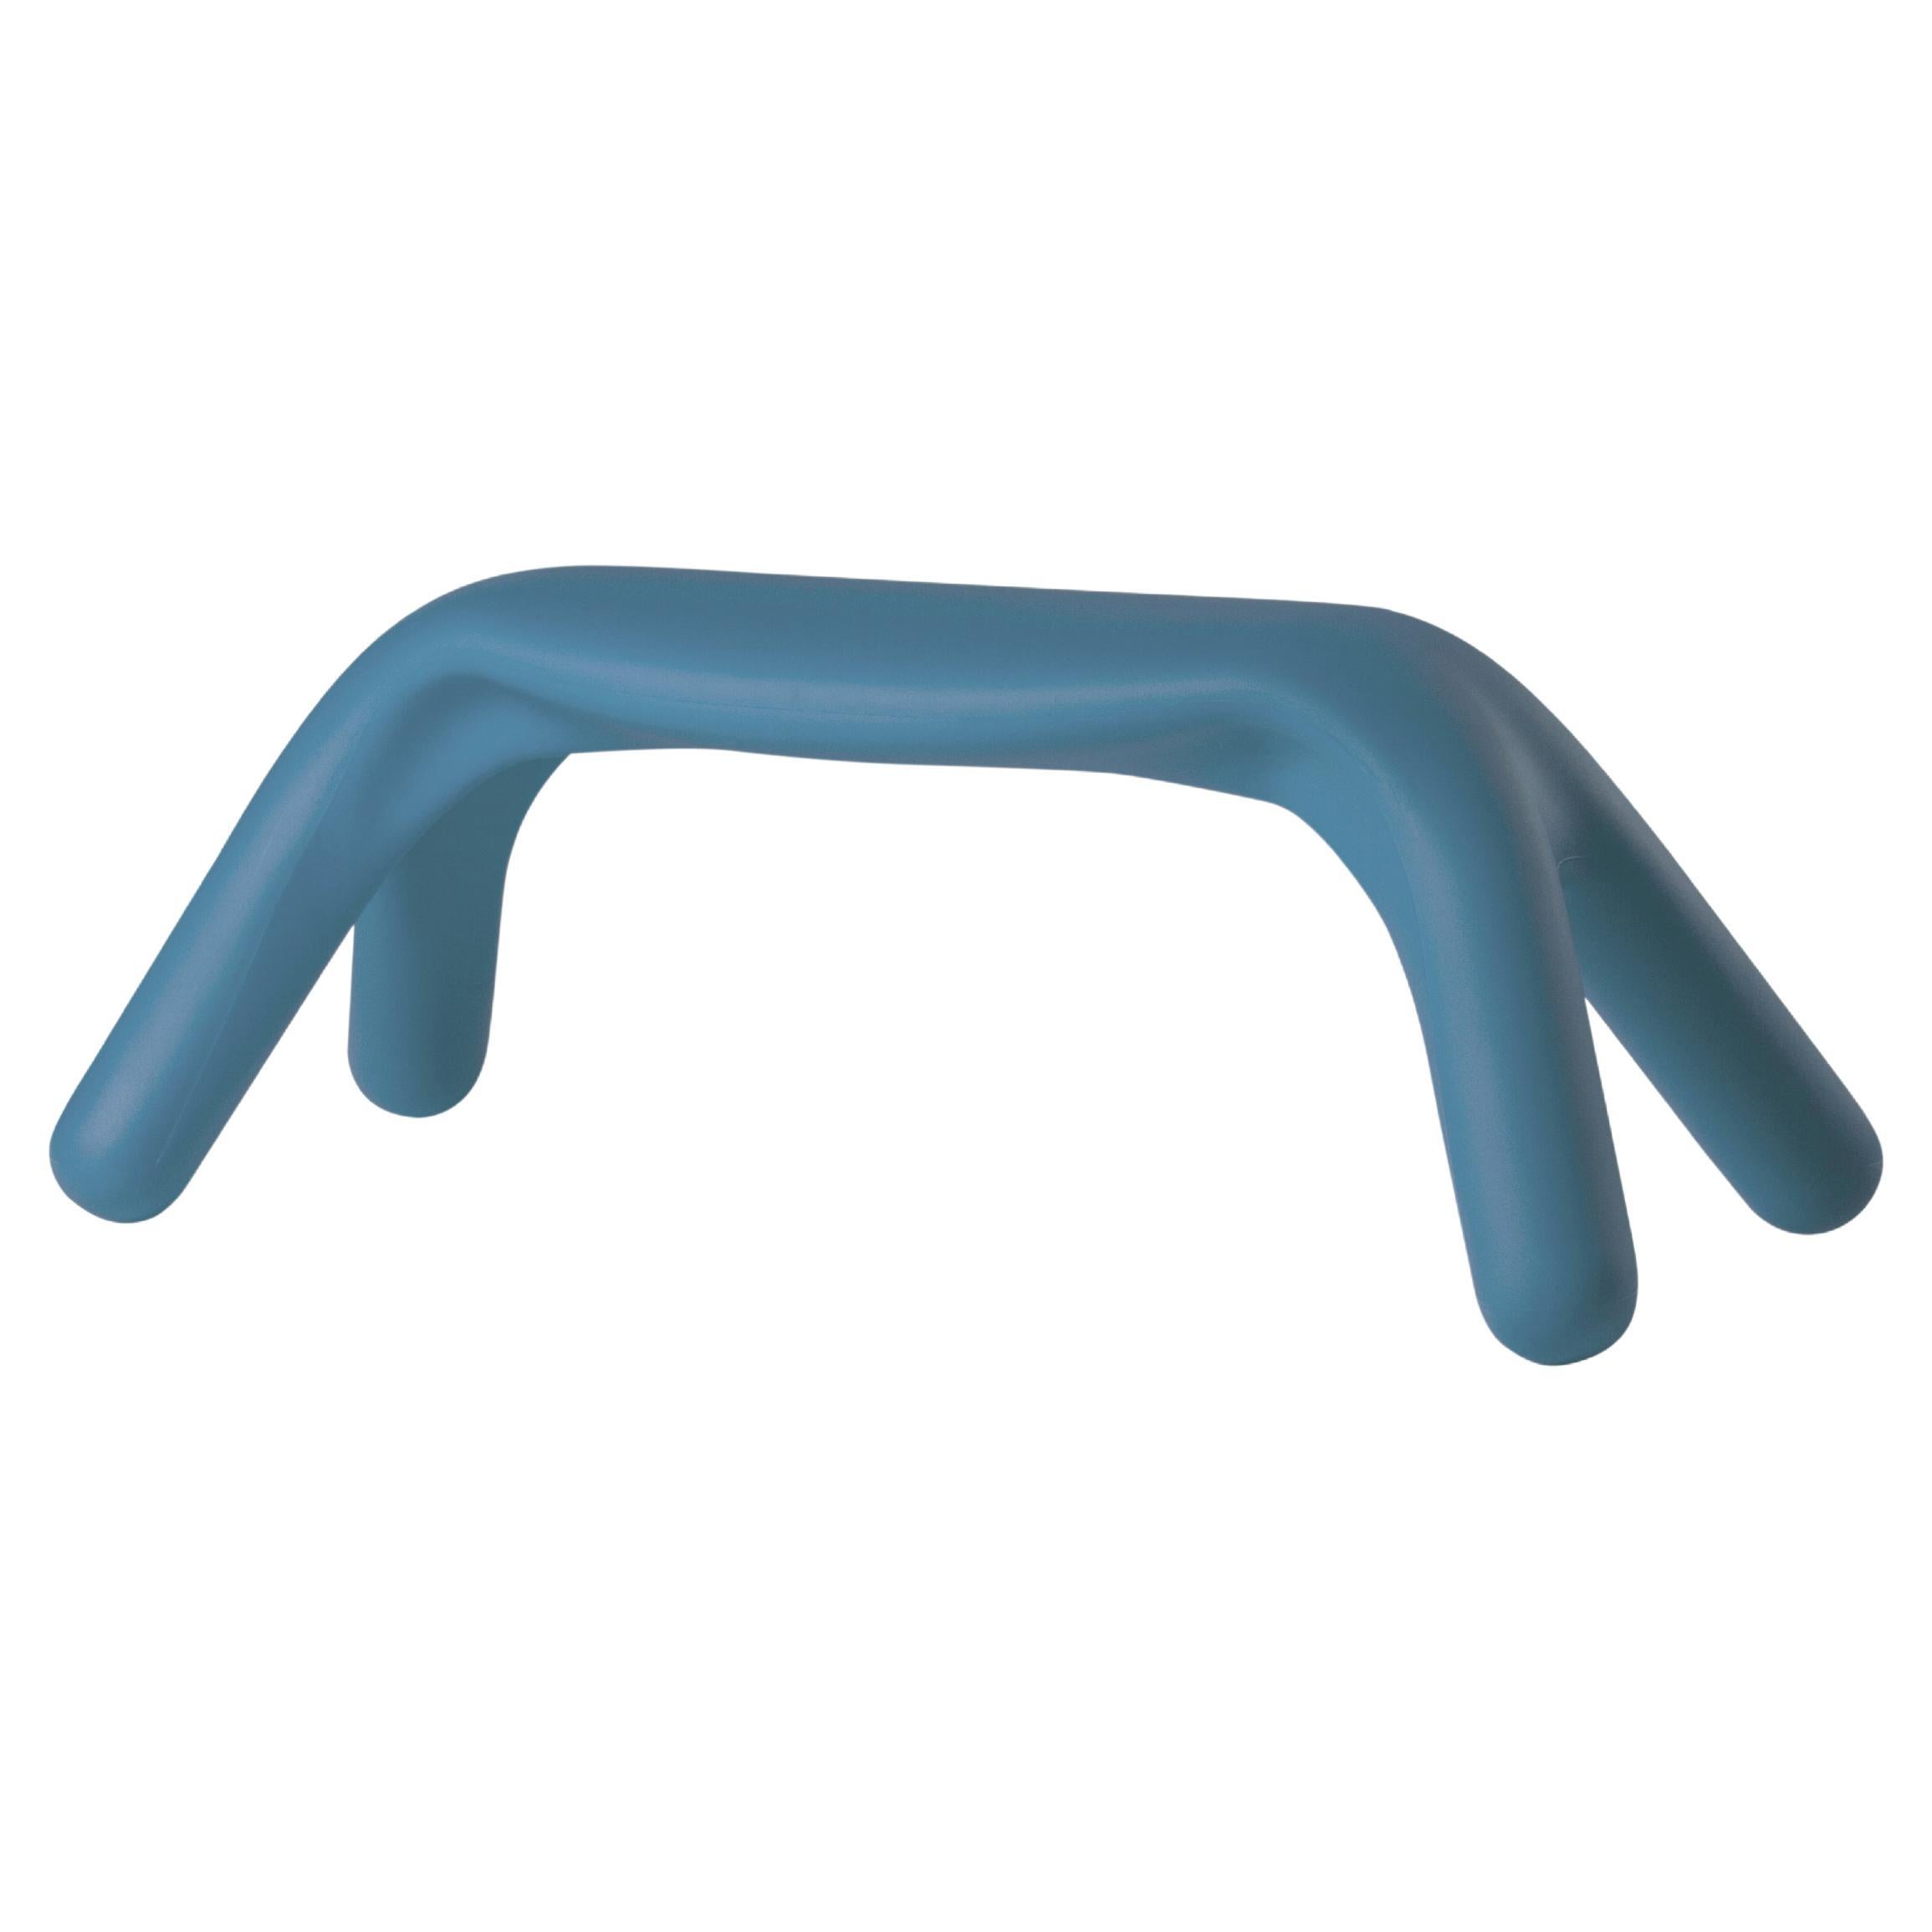 Slide Design Atlas Bench in Powder Blue by Giorgio Biscaro For Sale